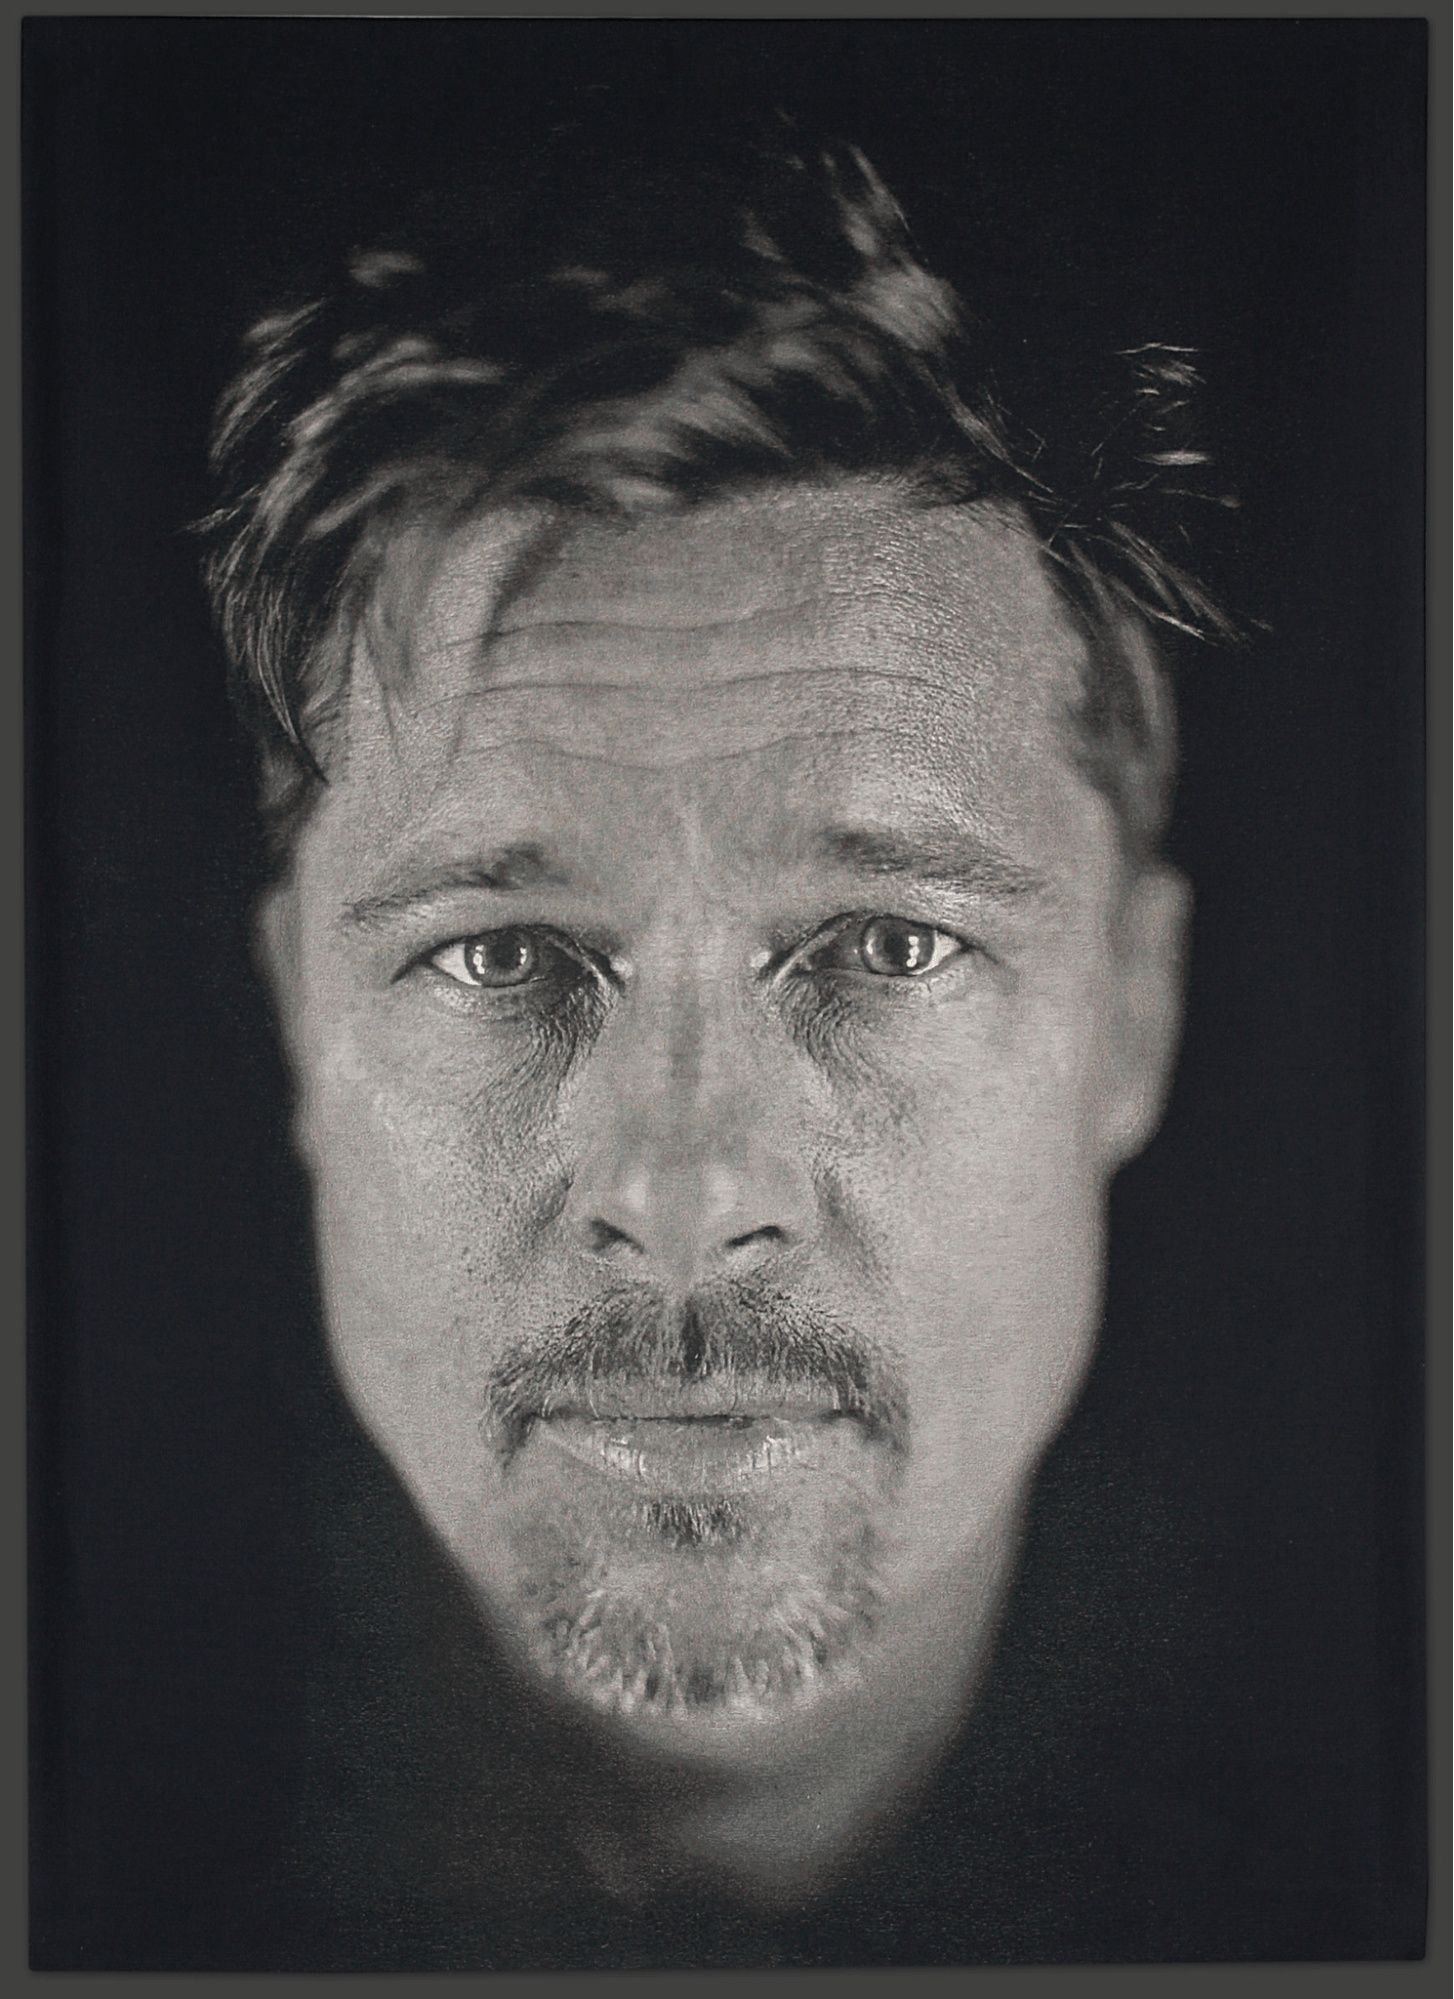 A photorealistic portrait of Brad Pitt by Chuck Close